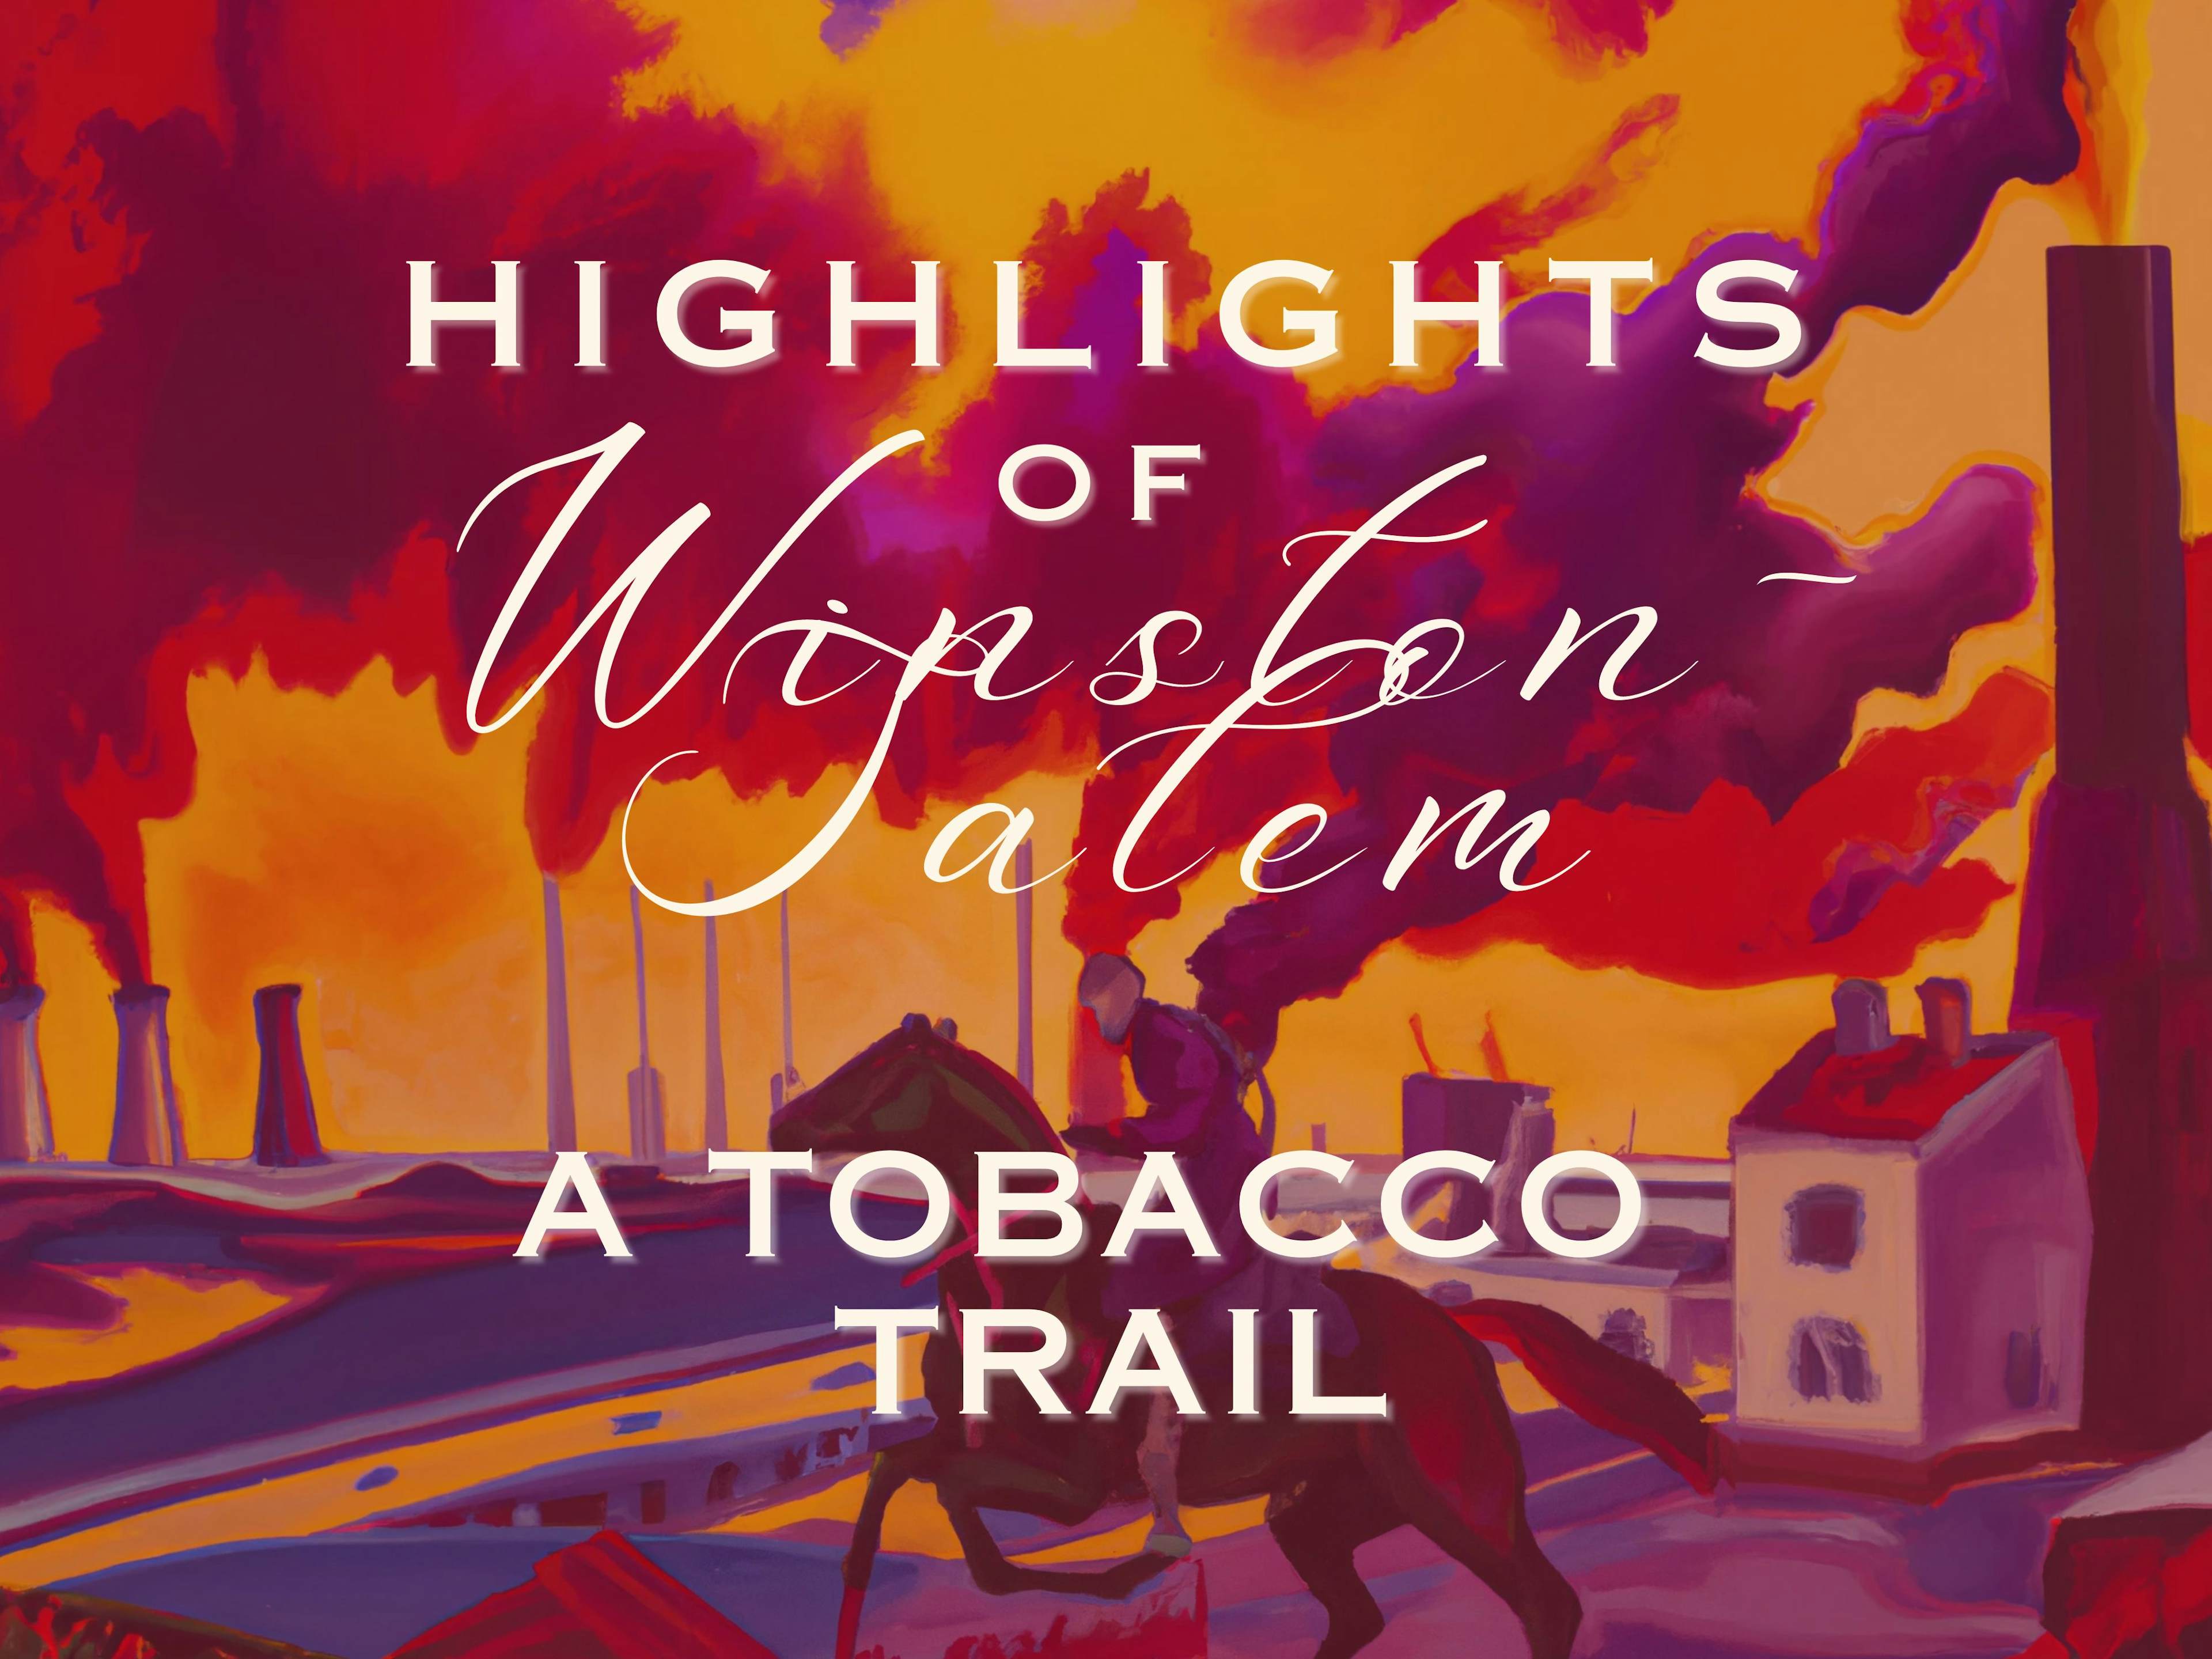 Highlights of Winston-Salem: A Tobacco Trail image